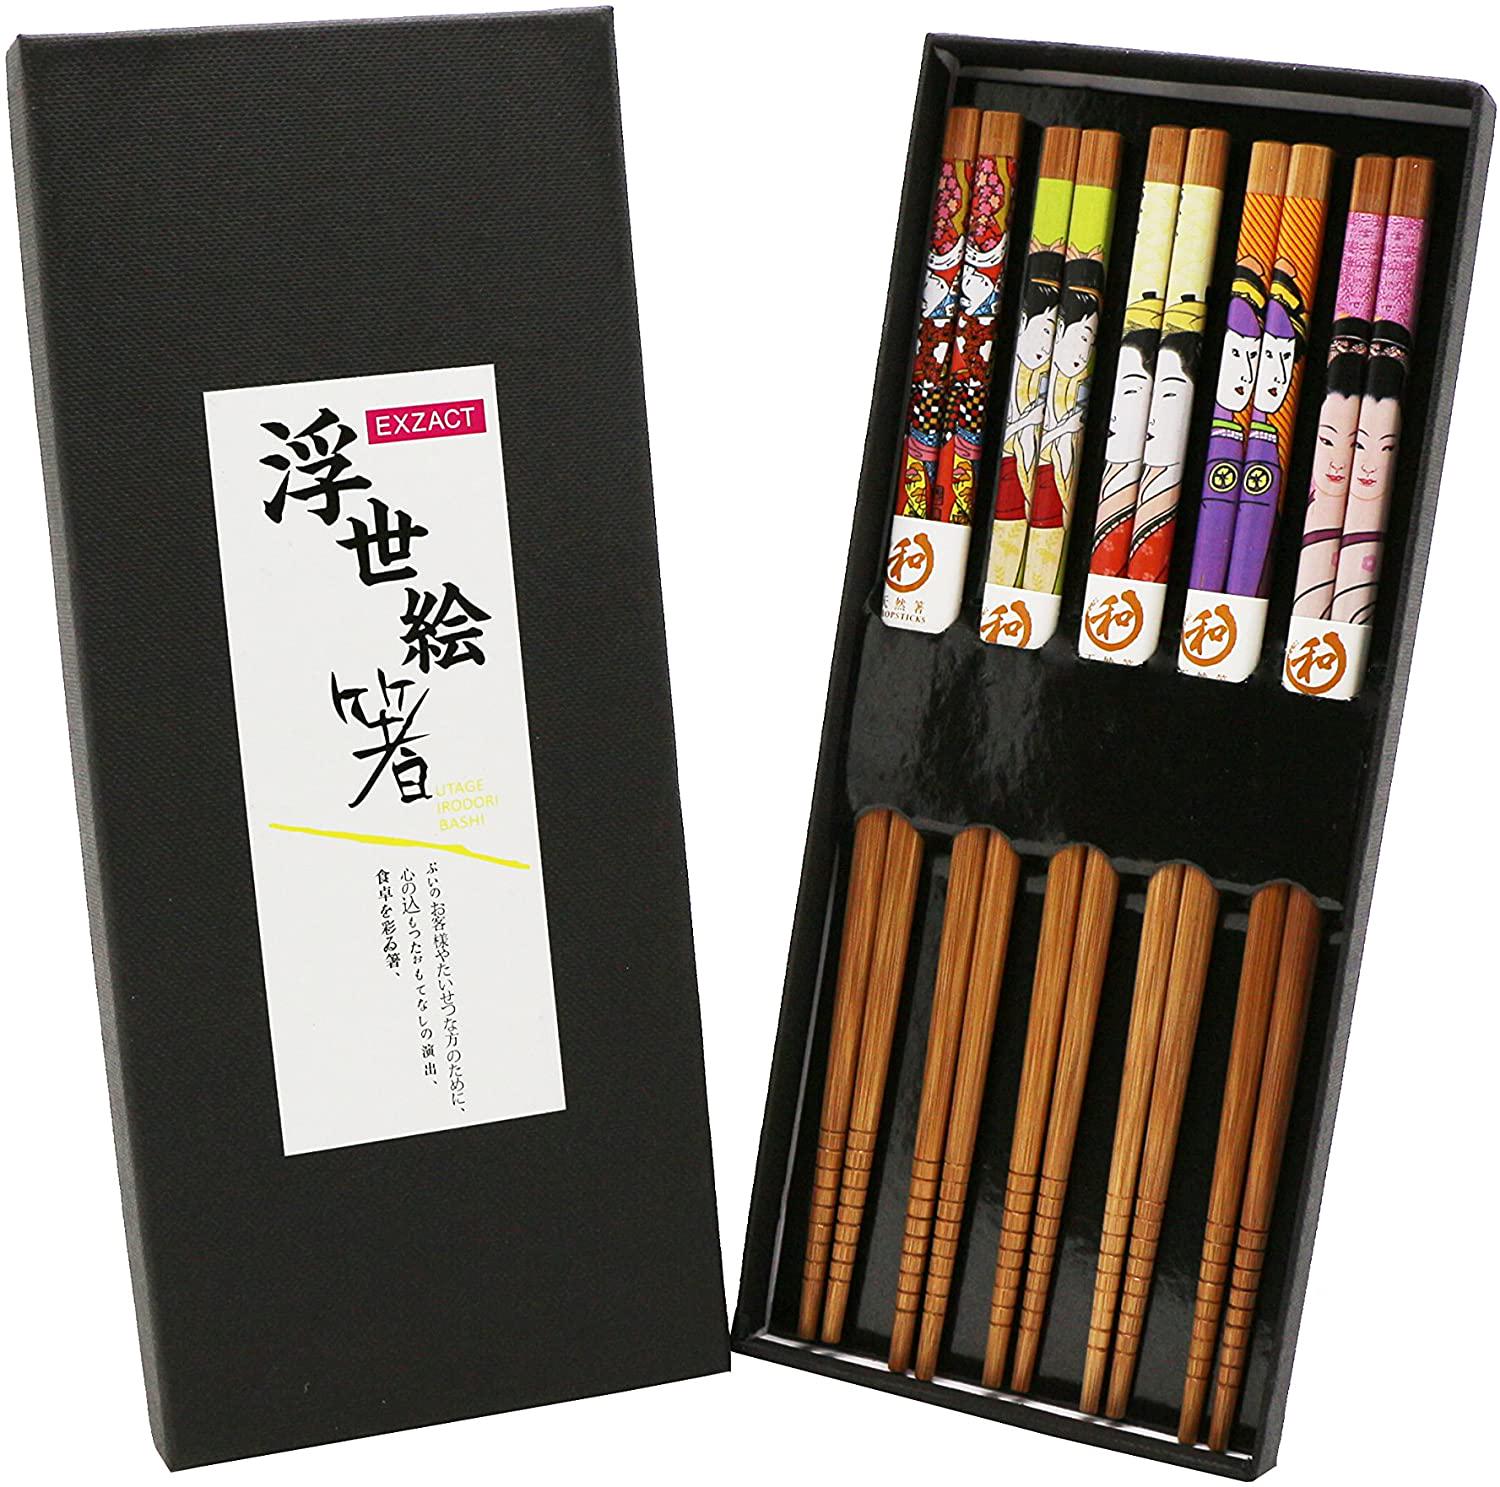 Exzact, (Ex-cs05) - Exzact EX-CS05 Chopsticks Gift Set - 5 Pairs of Reusable Natural Bamboo Chopsticks in a Beautiful Black Handmade Box - Decorated Japanese Style